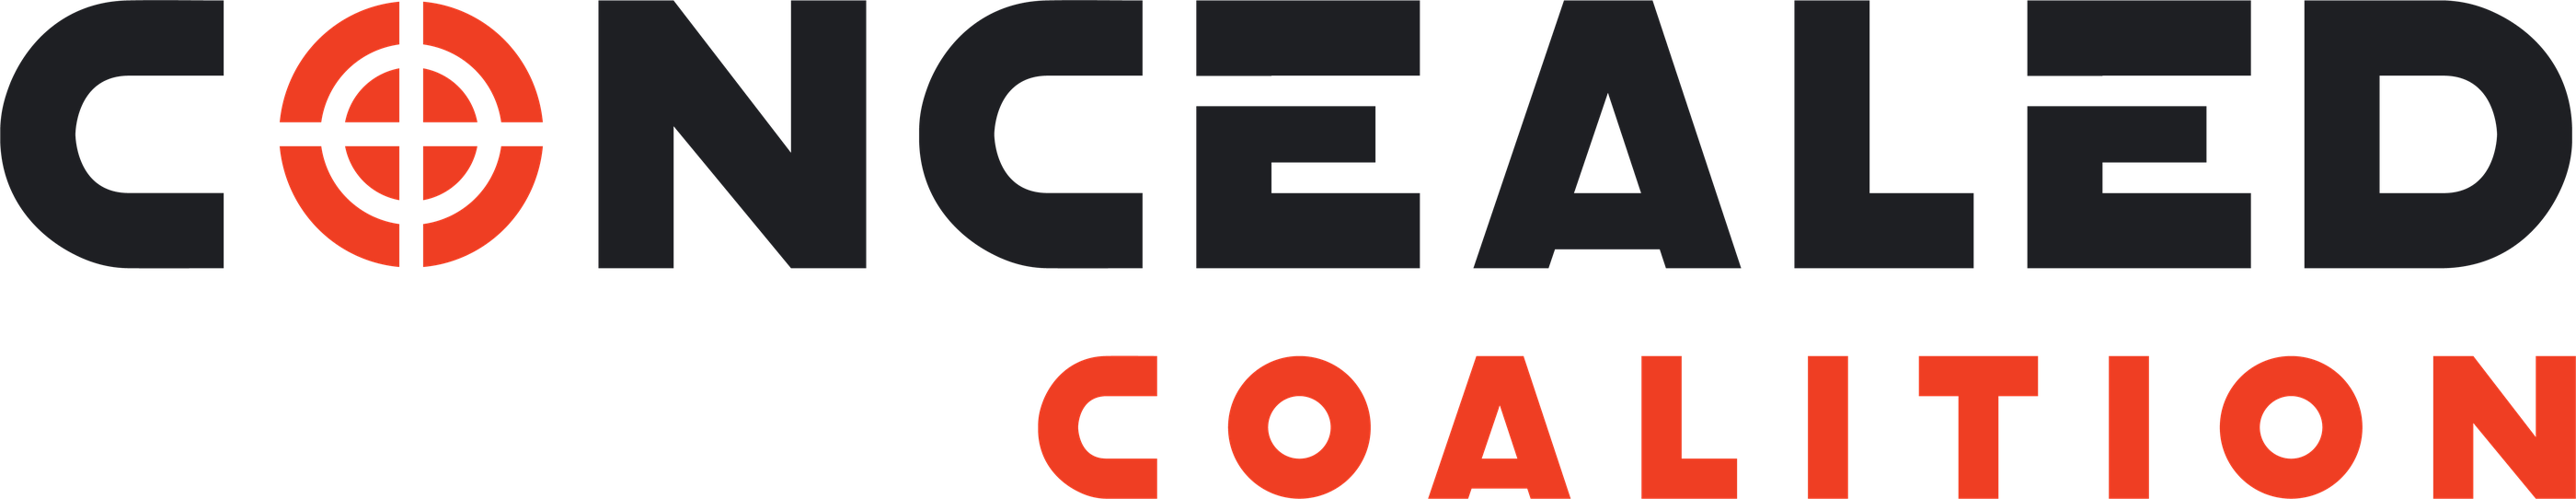 Concealed Coalition Logo